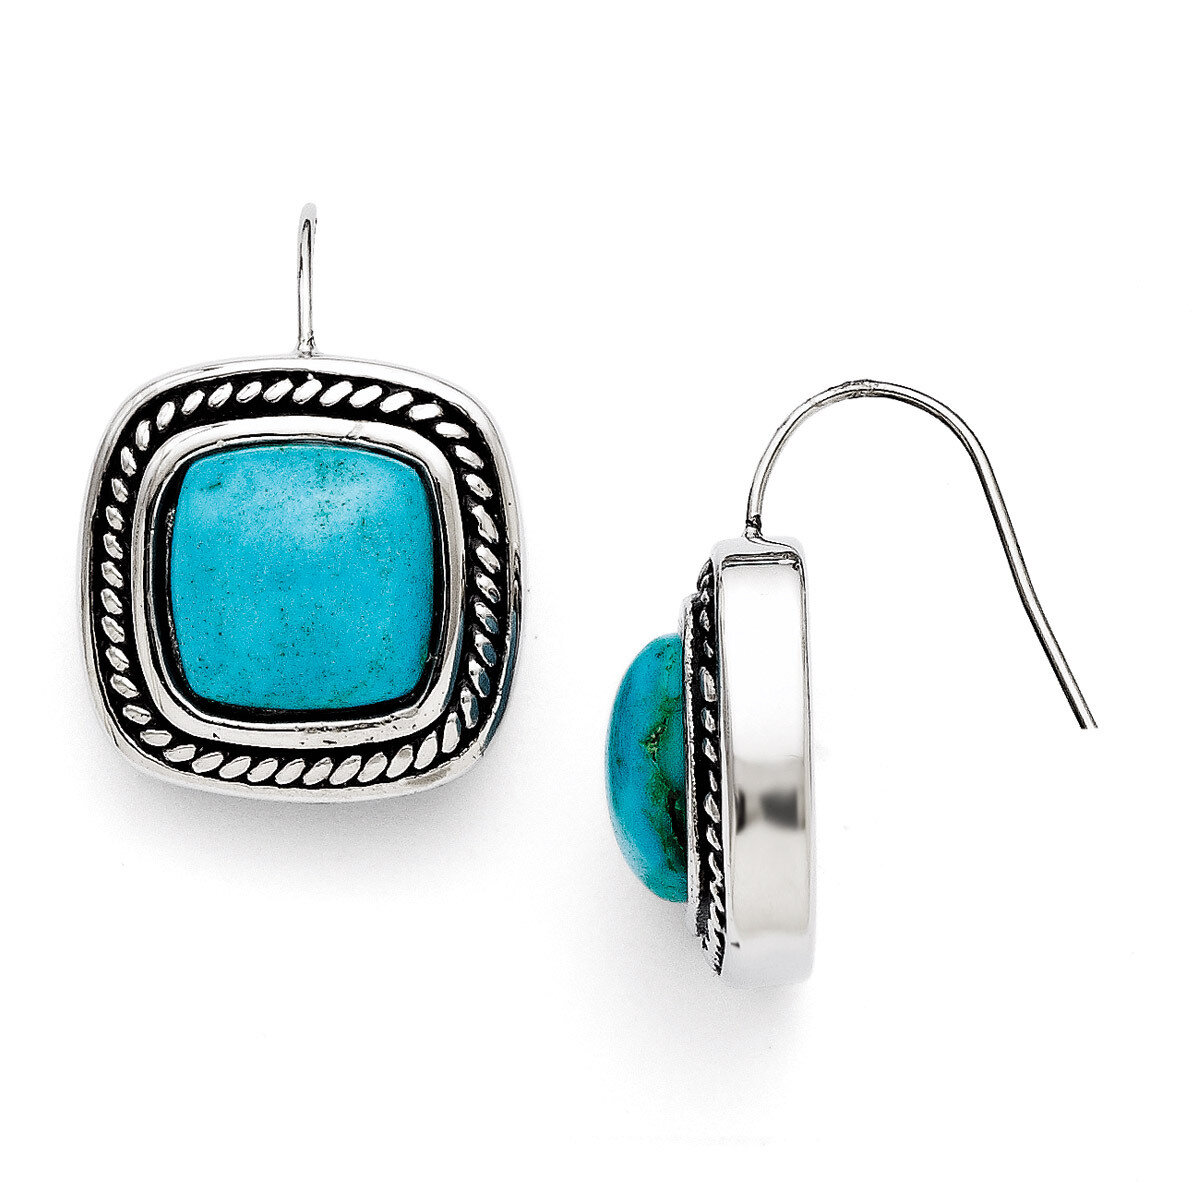 Antiqued Imitation Turquoise Shepherd Hook Earrings - Stainless Steel SRE700